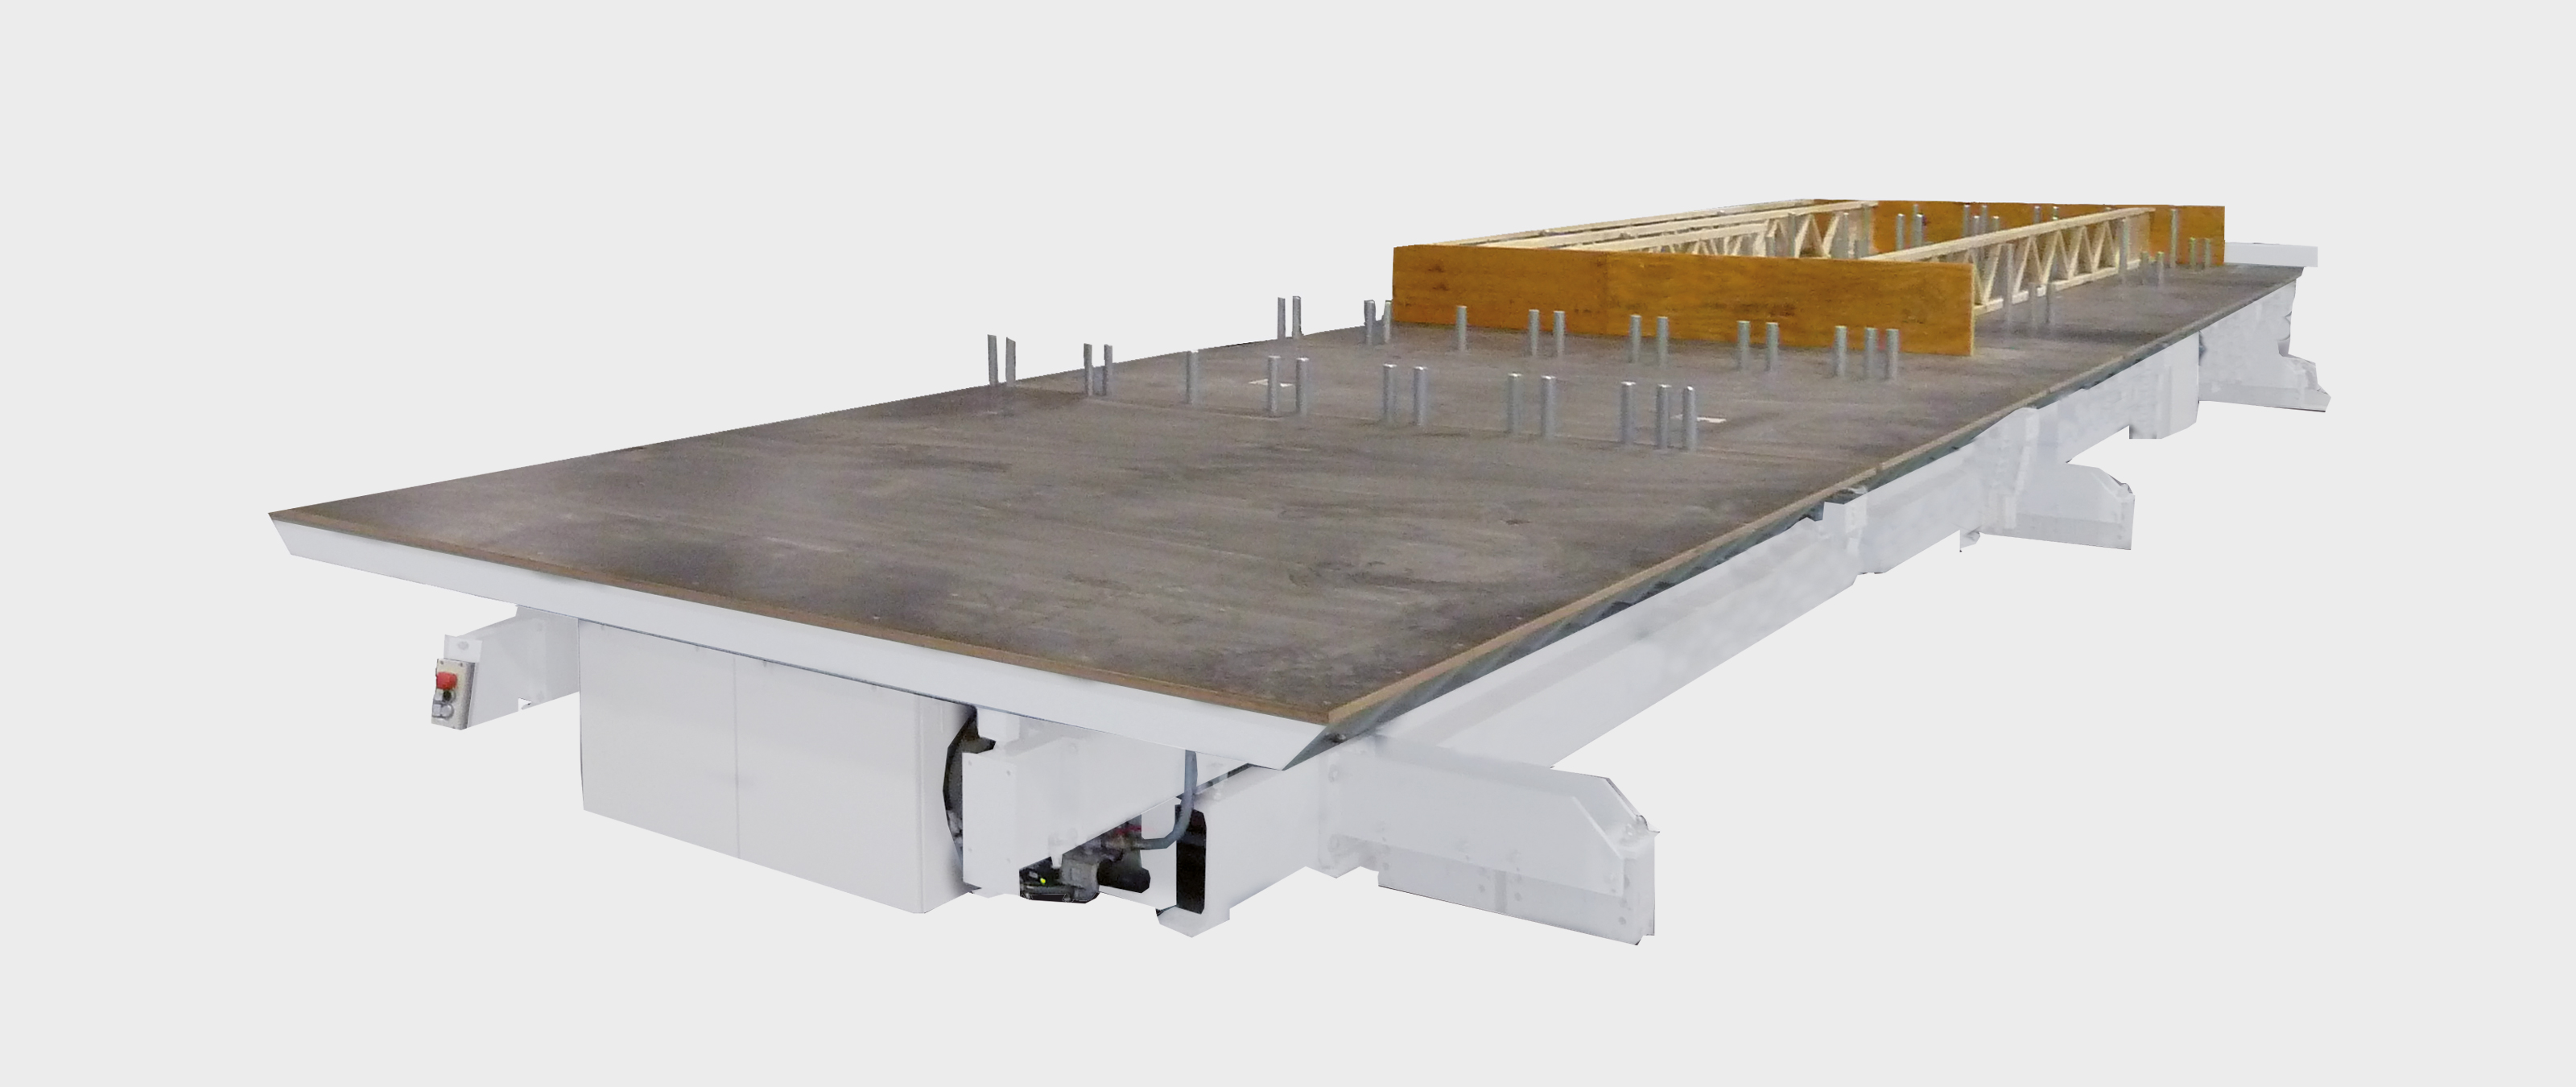 WEINMANN Стол для сборки элементов крыш и перекрытий BUILDTEQ F-500